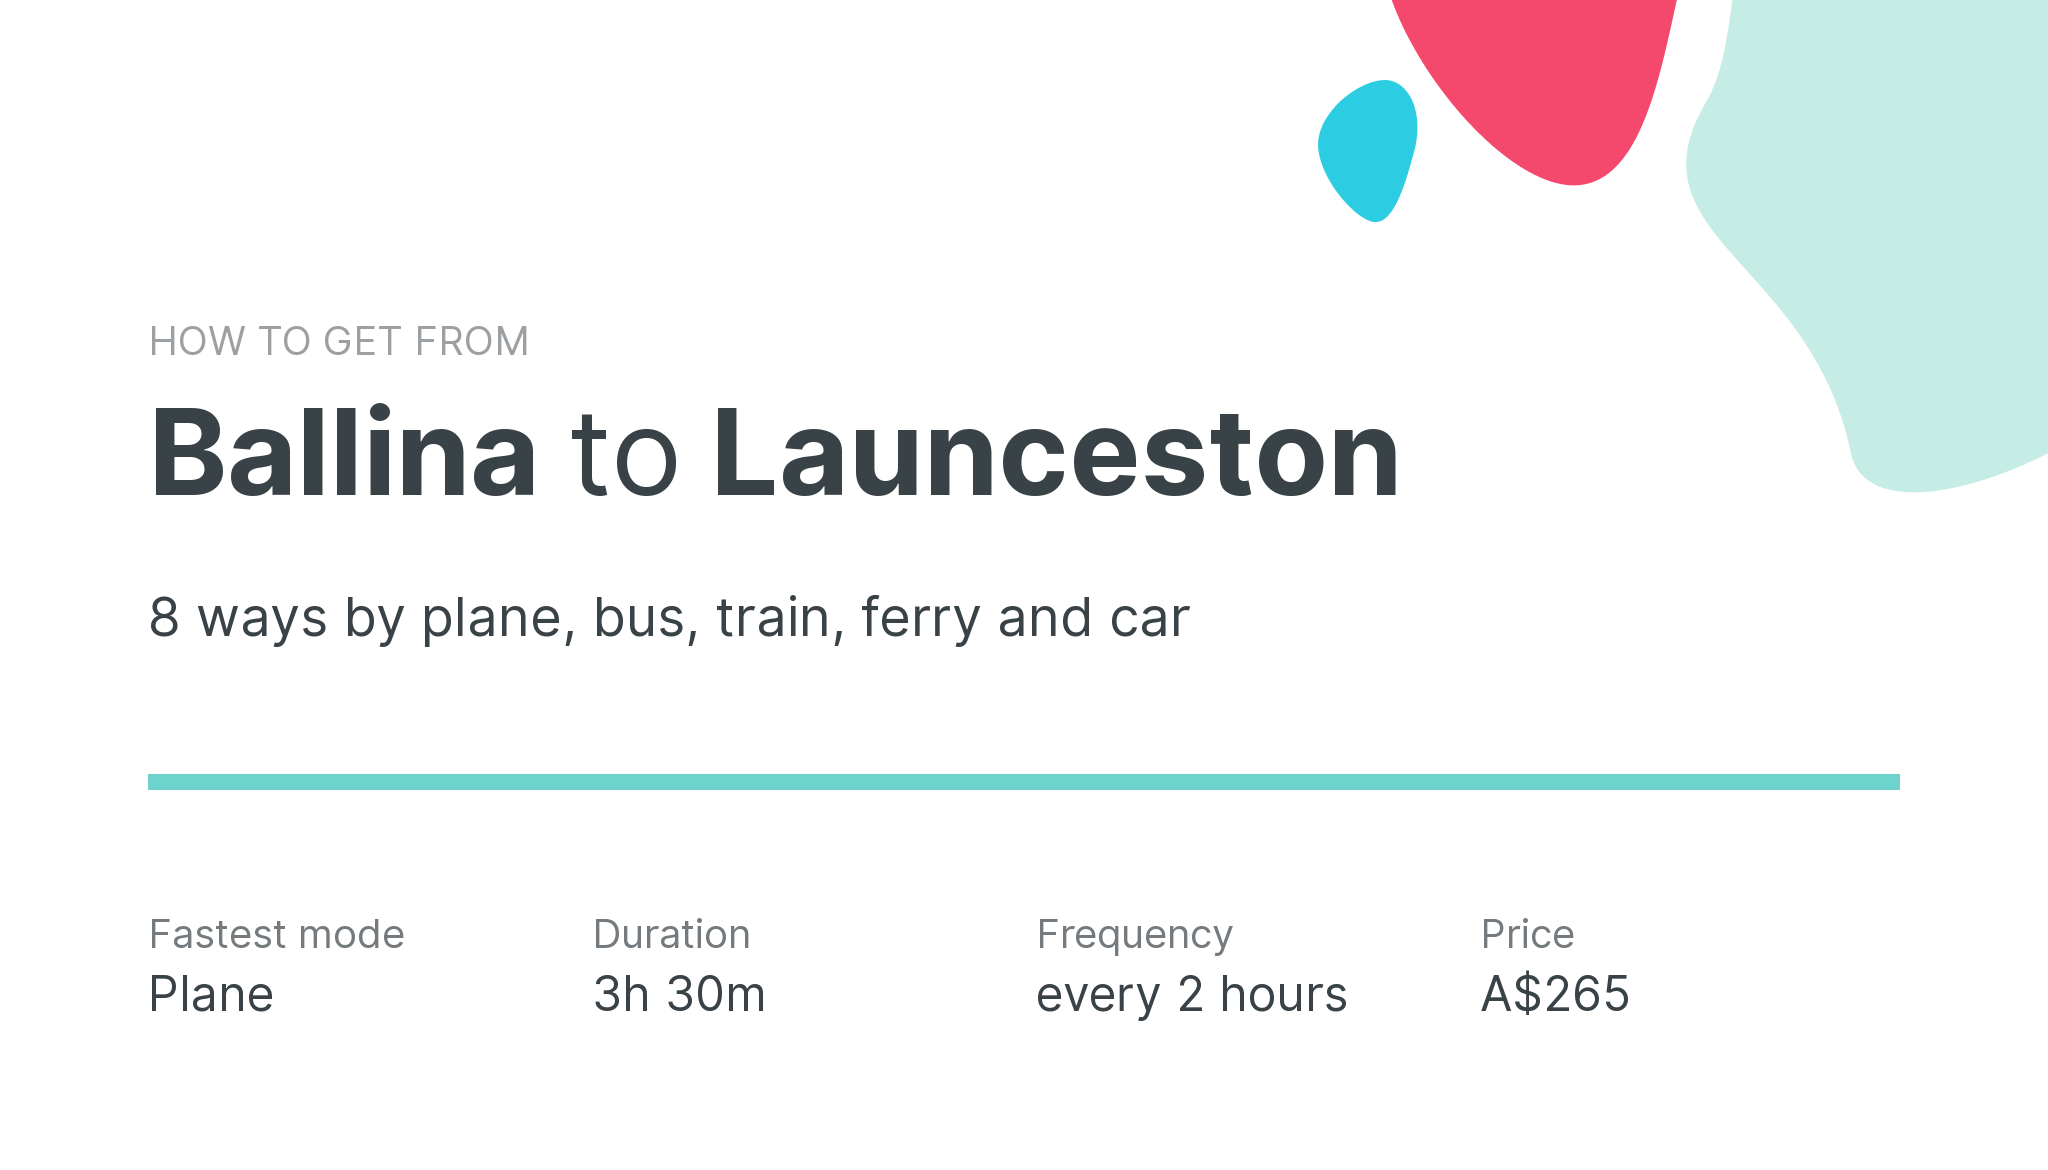 How do I get from Ballina to Launceston